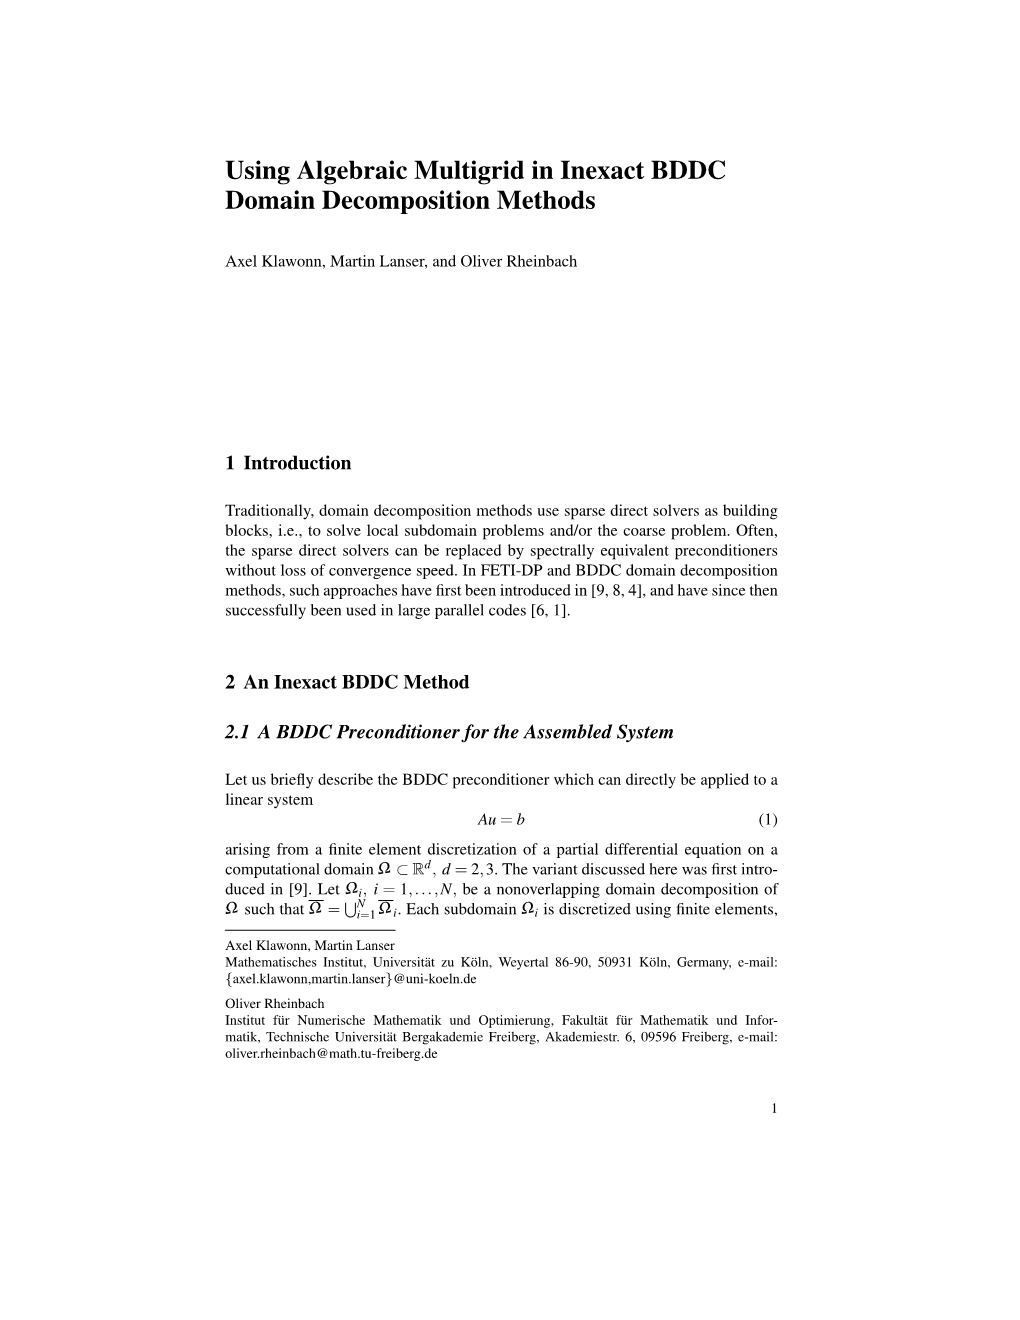 Using Algebraic Multigrid in Inexact BDDC Domain Decomposition Methods